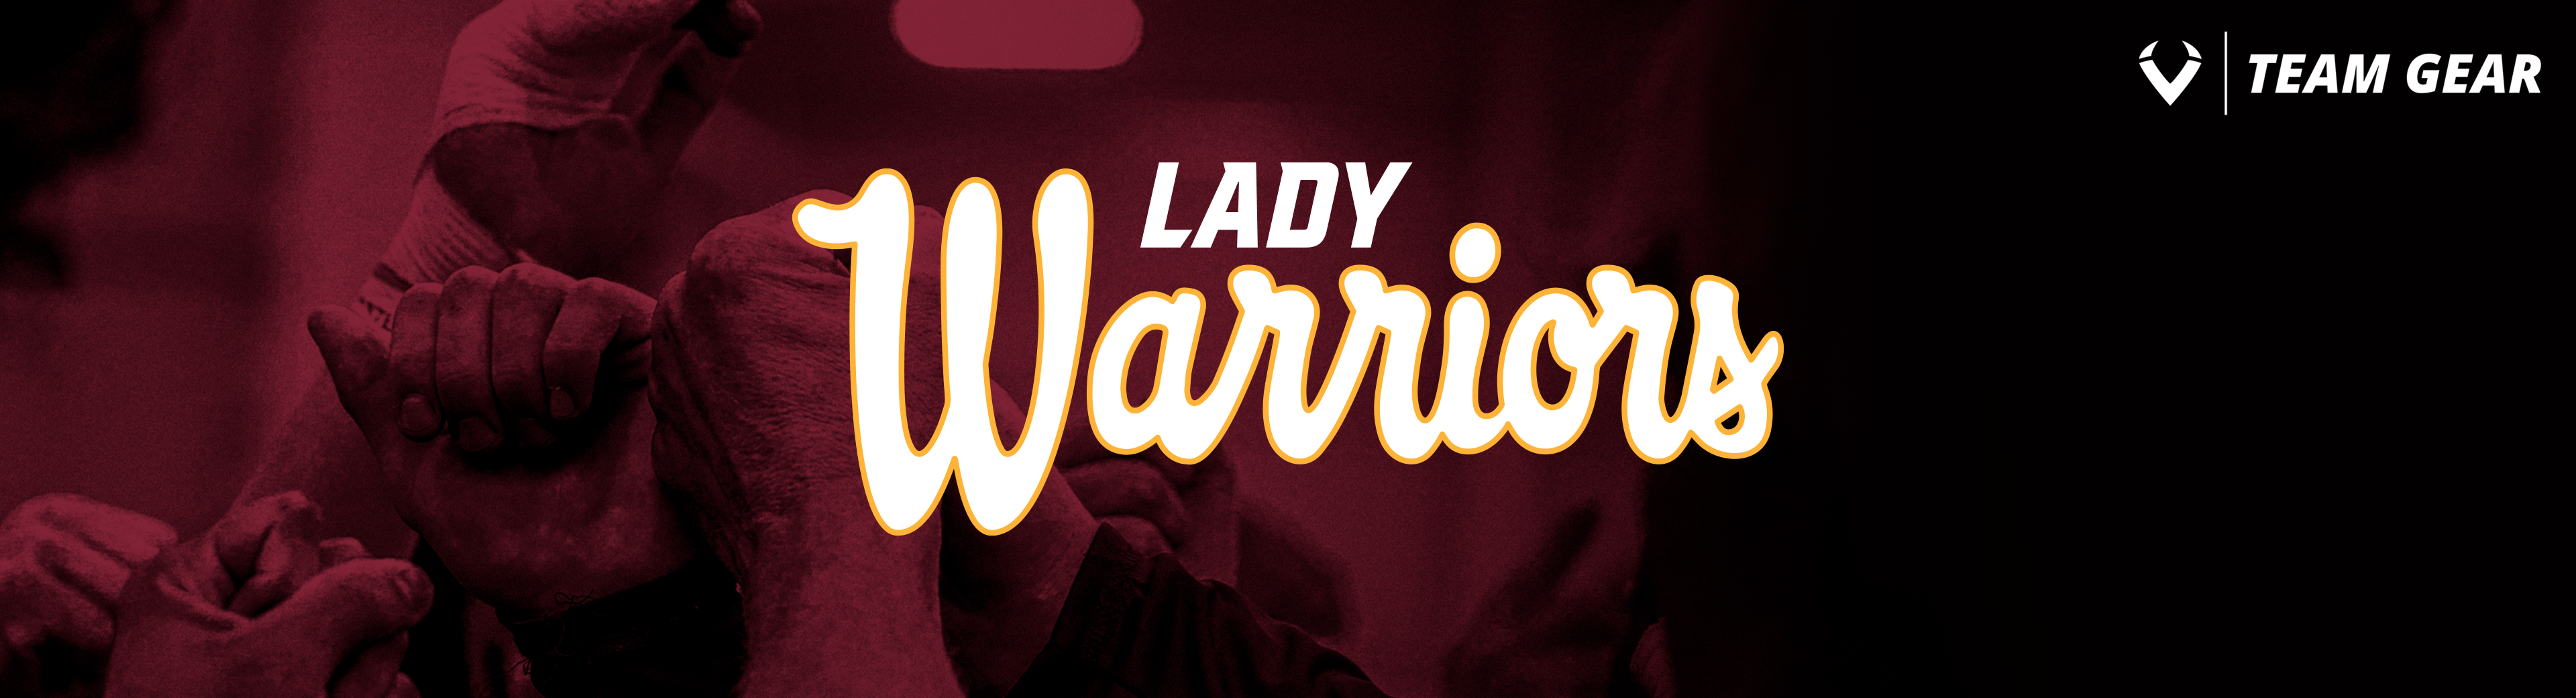 Walsh Lady Warriors